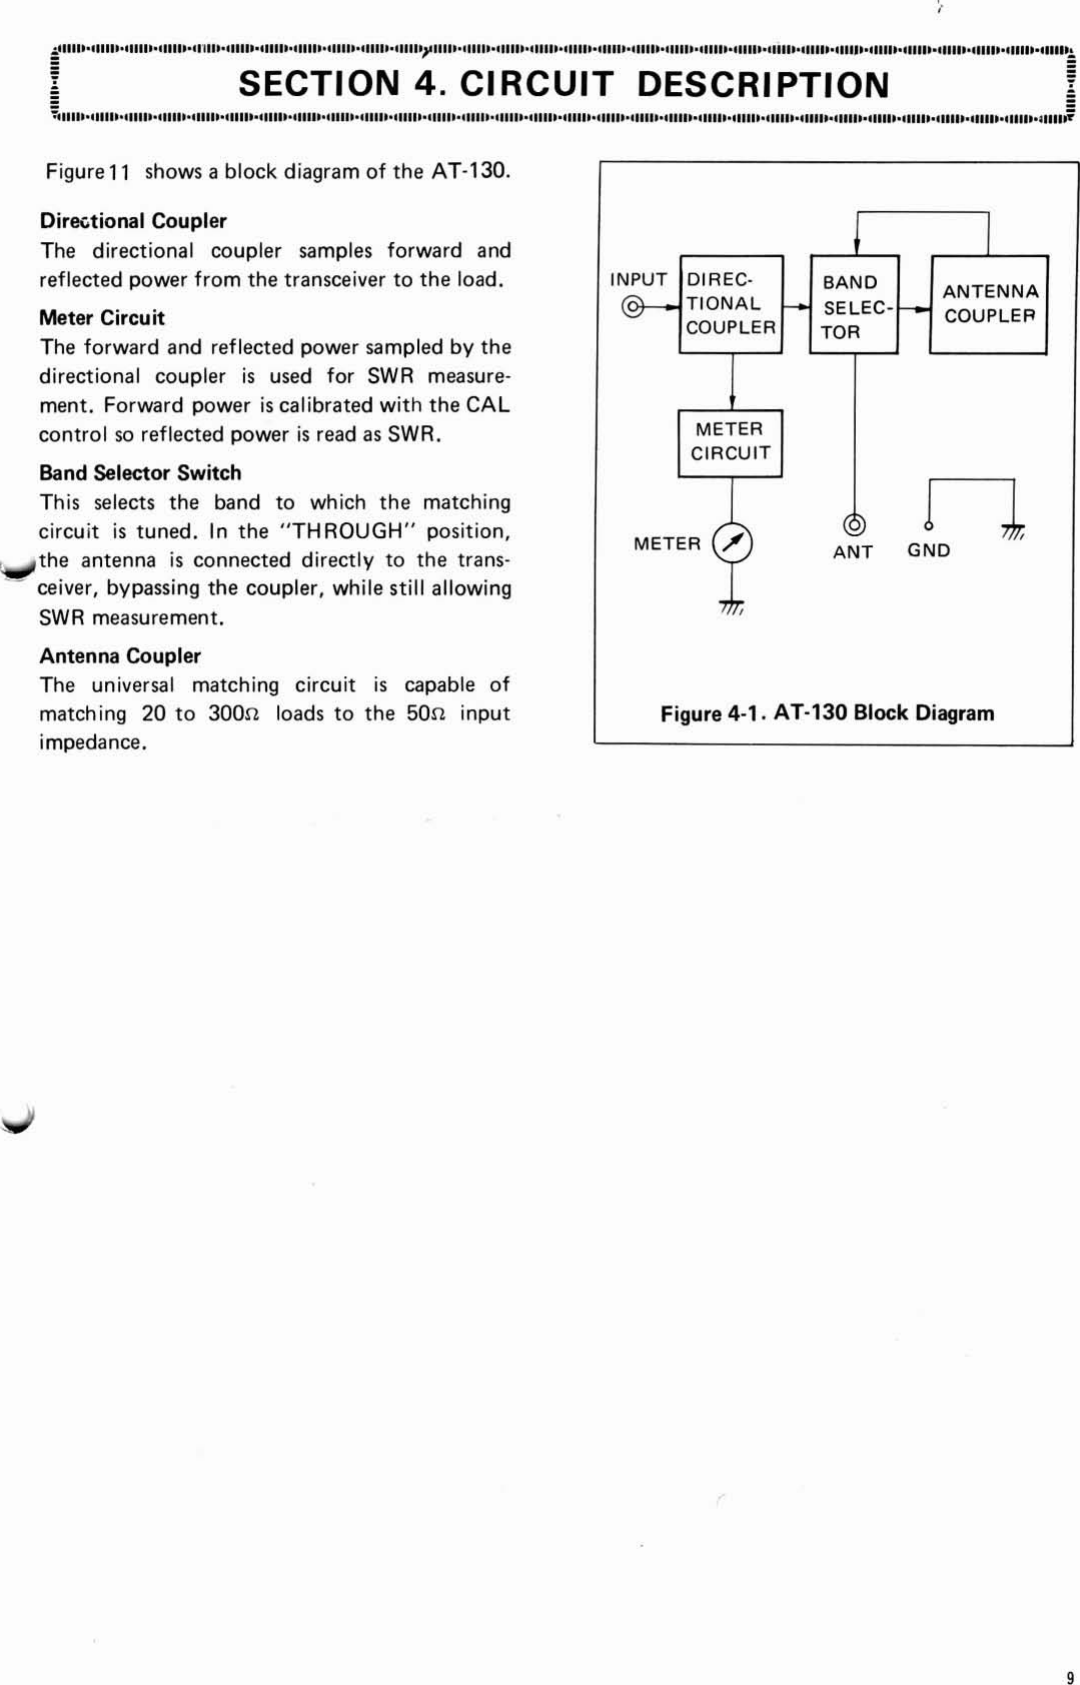 Page 9 of 12 - Kenwood Kenwood-Kenwood-Car-Stereo-System-At-130-Users-Manual- Antenna Tuner AT-130 Instruction Manual  Kenwood-kenwood-car-stereo-system-at-130-users-manual